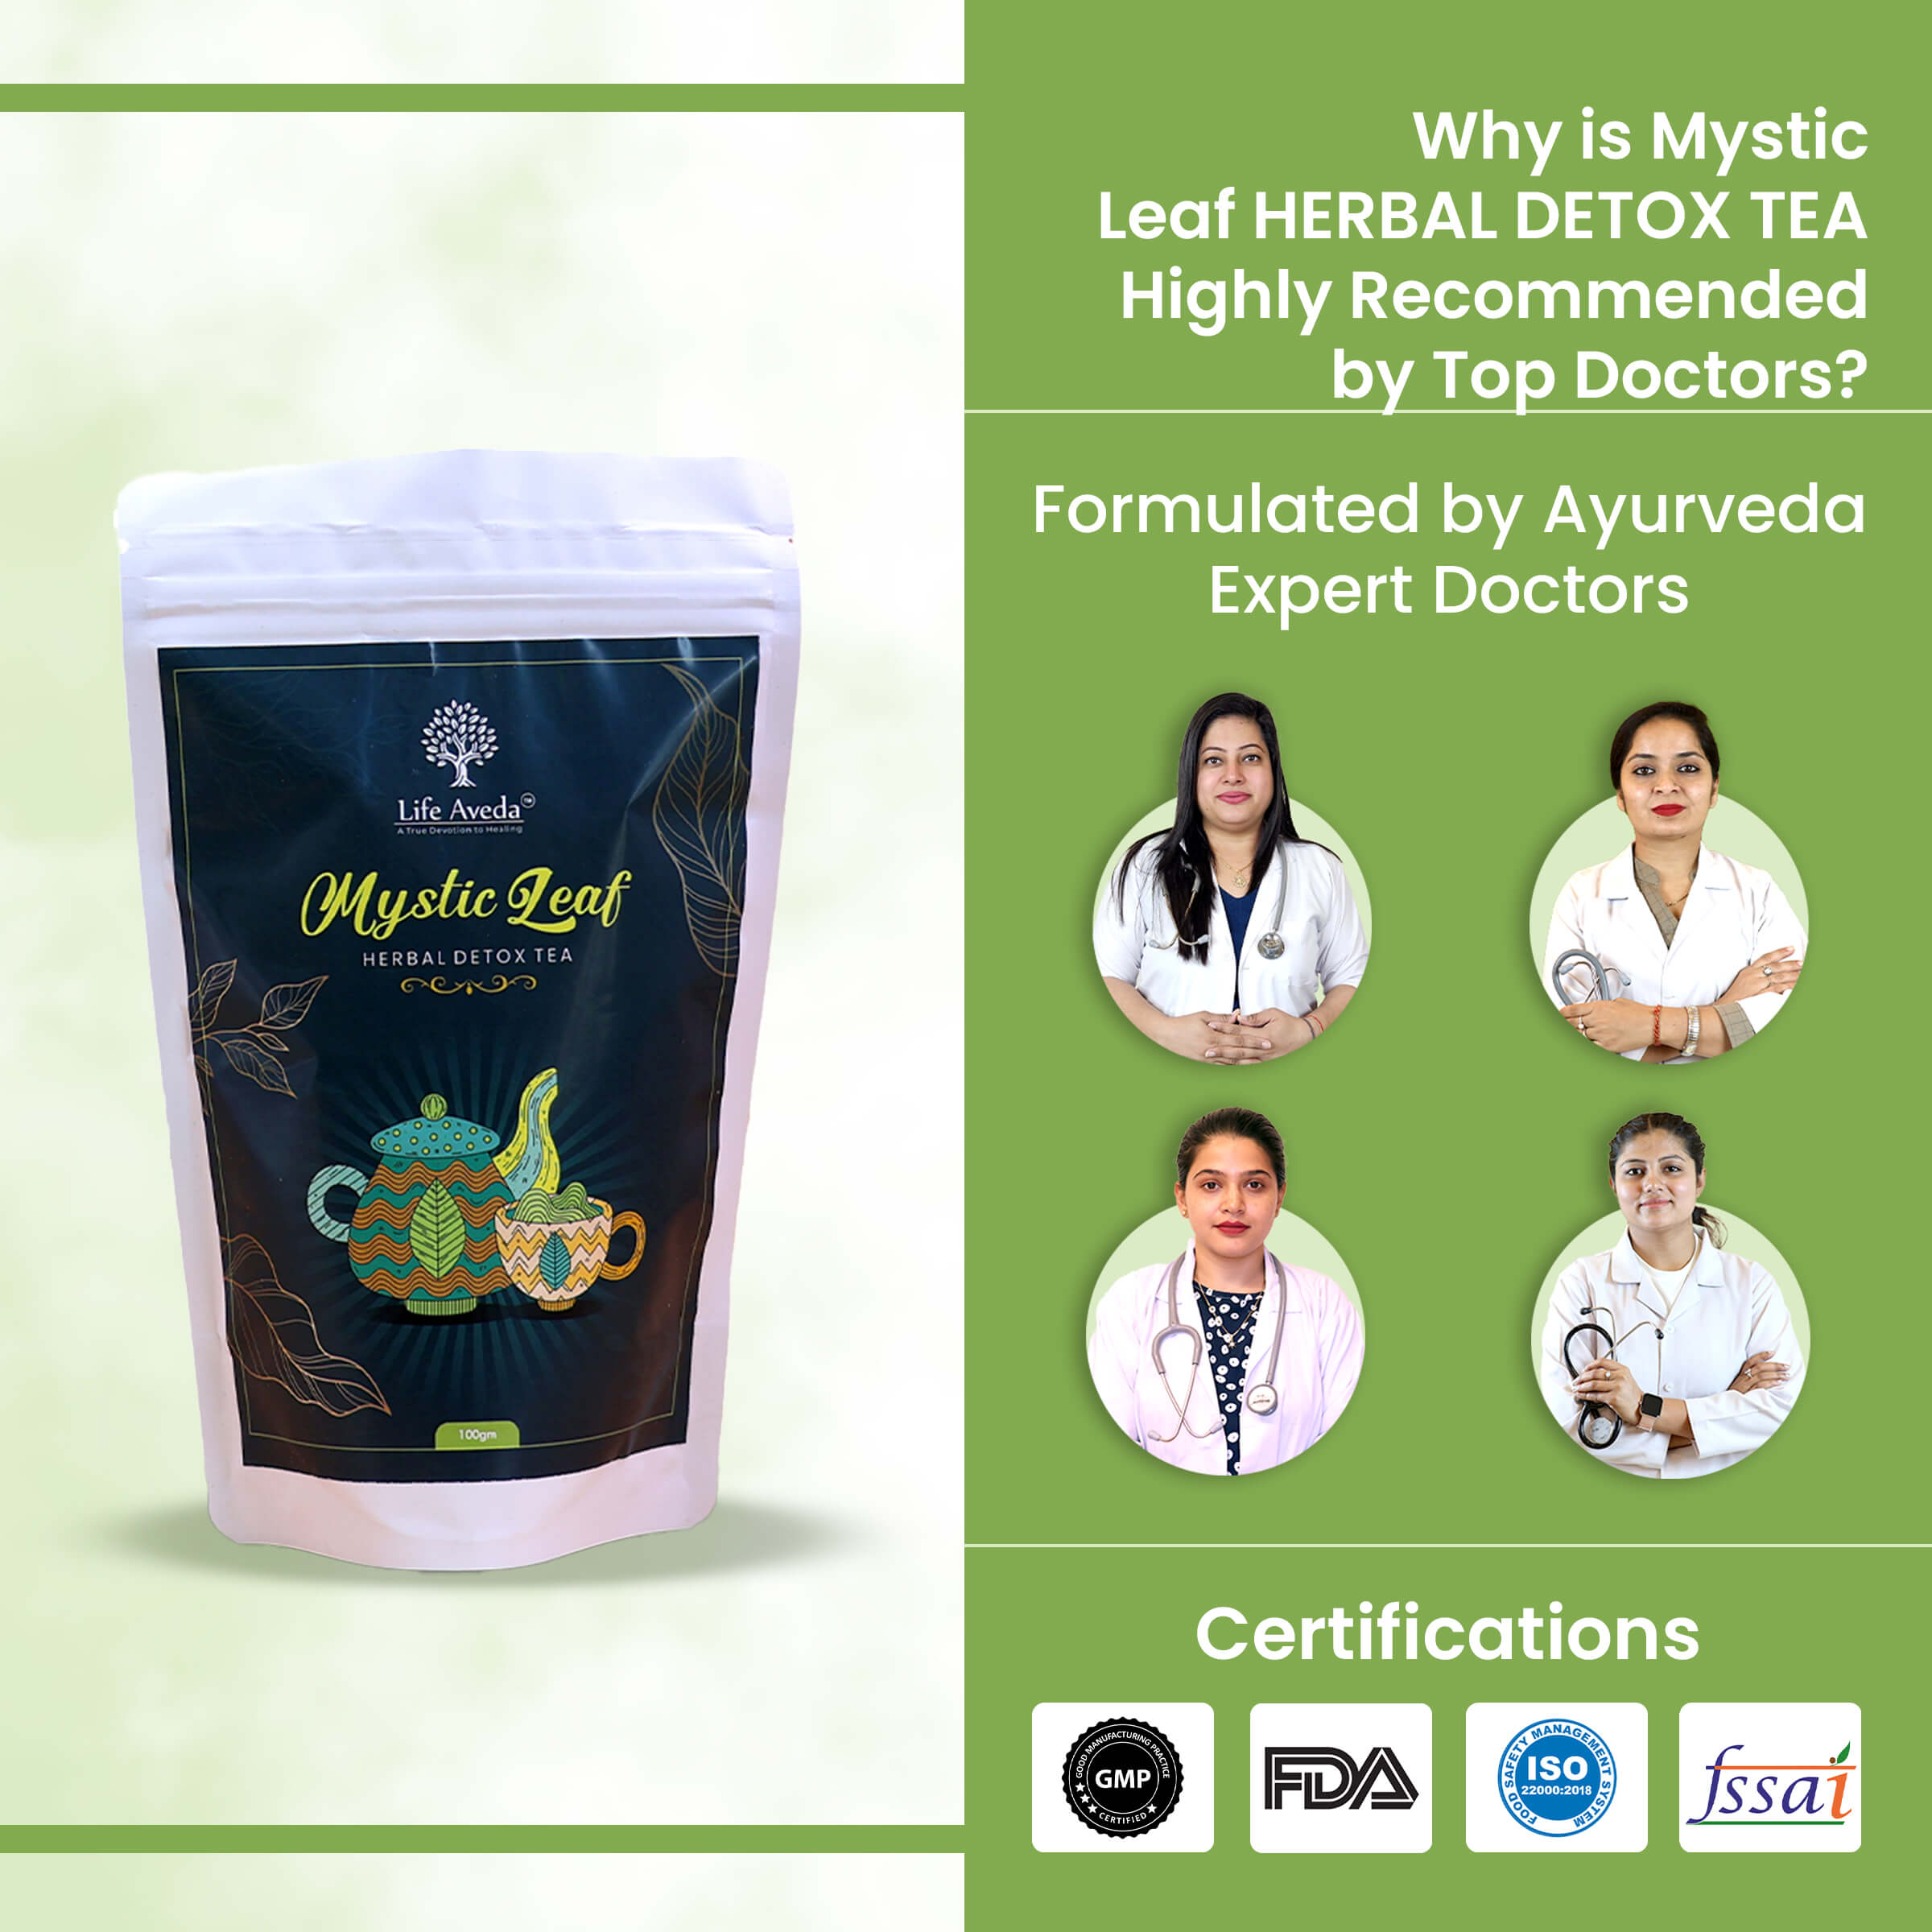 Life Aveda Mystic Leaf Herbal Detox Tea Doctors Certifications